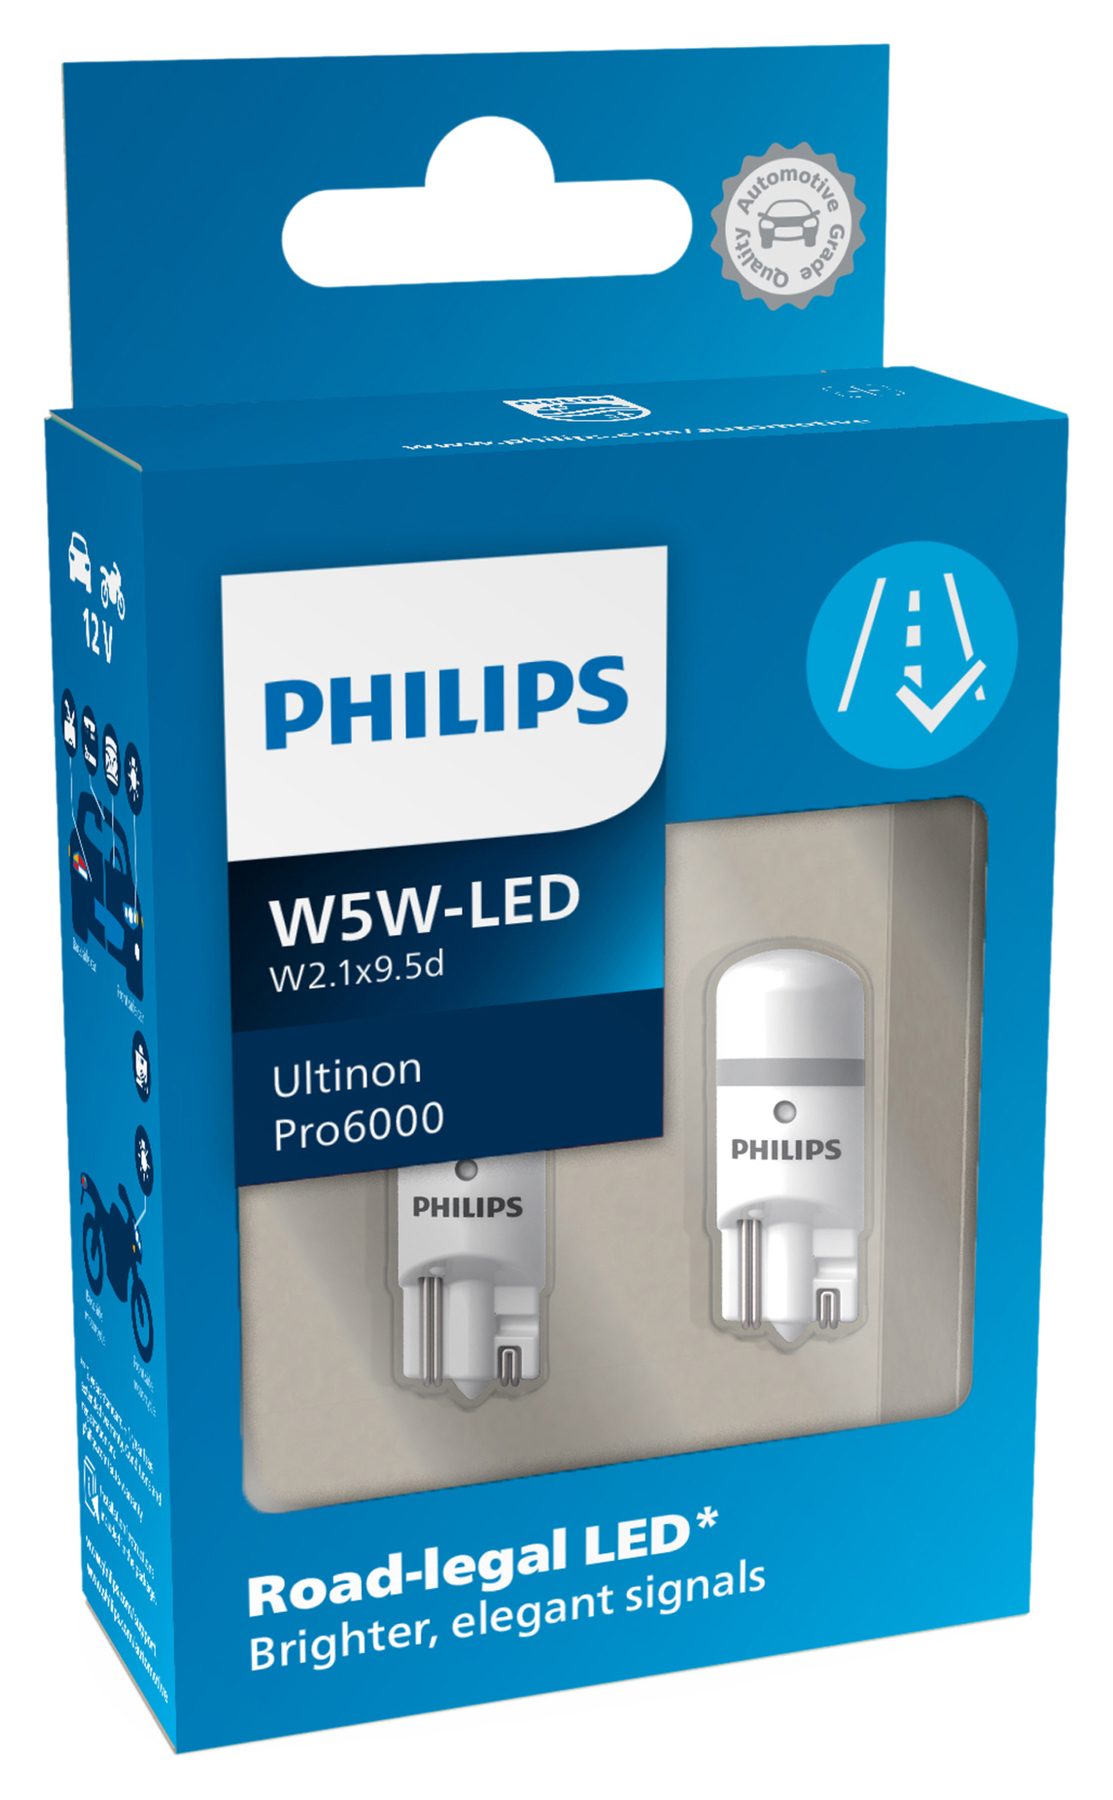 Philips PHILIPS RACINGVISION W5W-LED avantageux